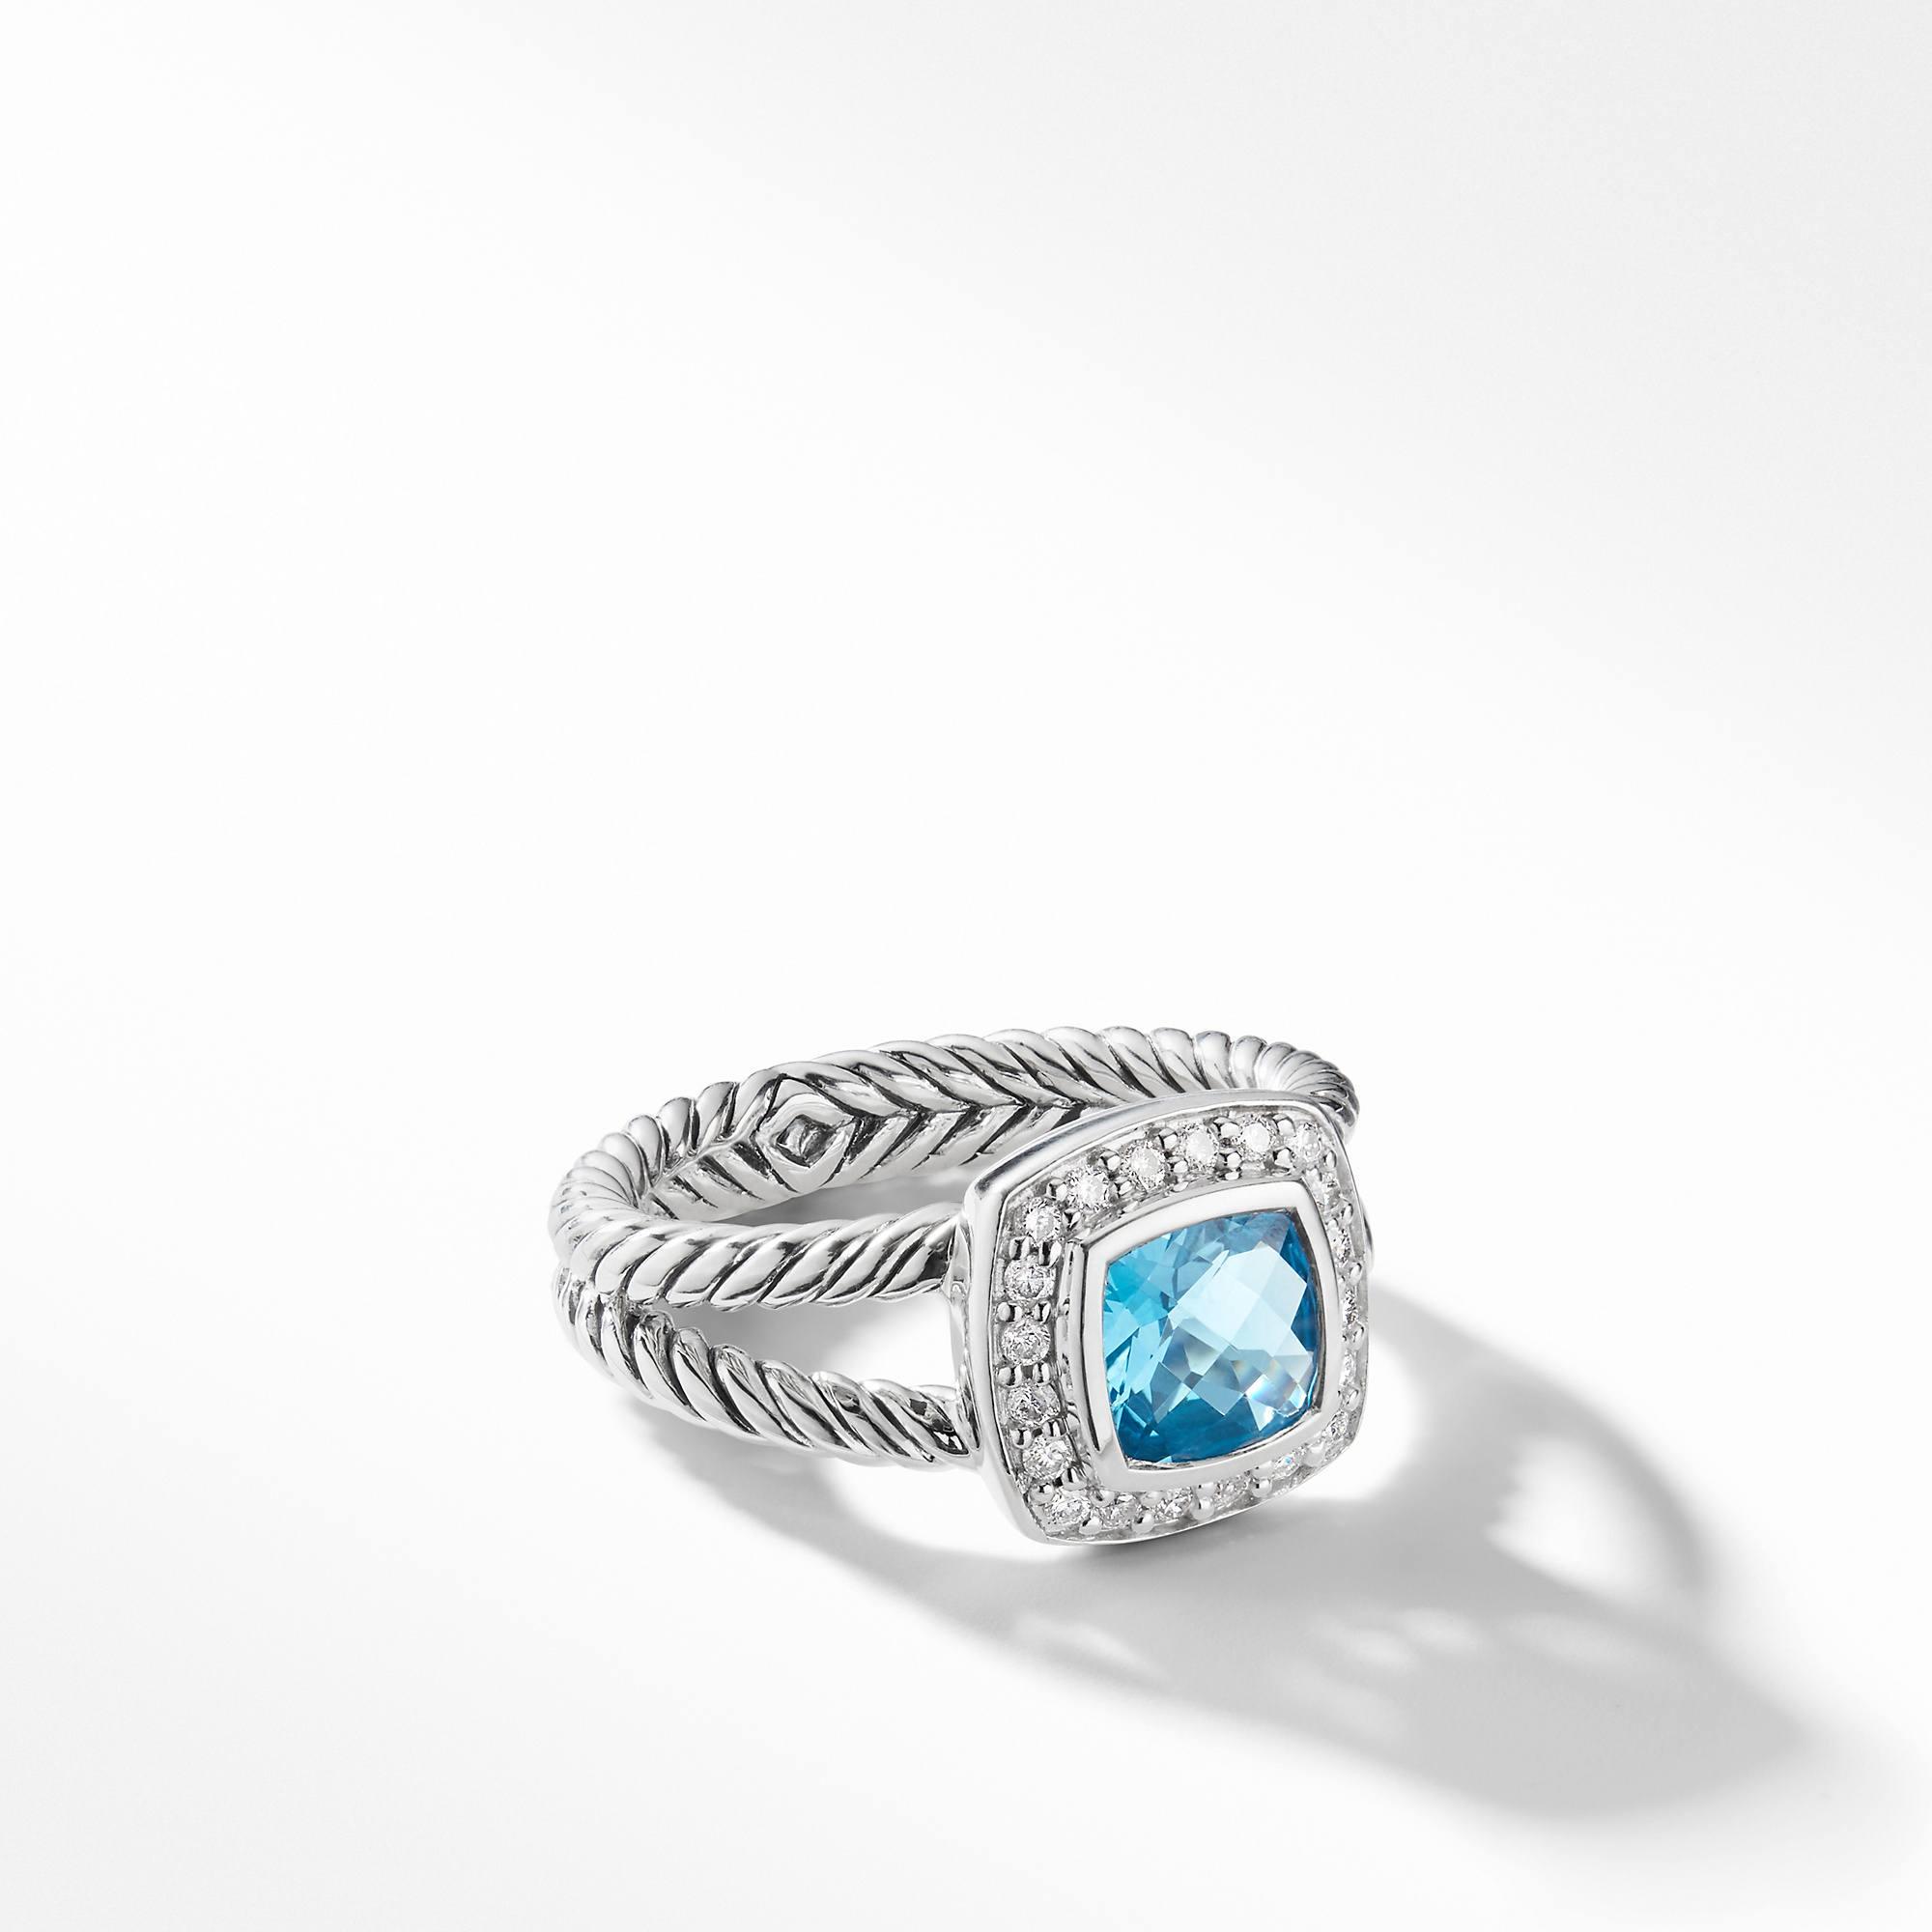 David Yurman Petite Albion Ring with Blue Topaz and Diamonds, size 6